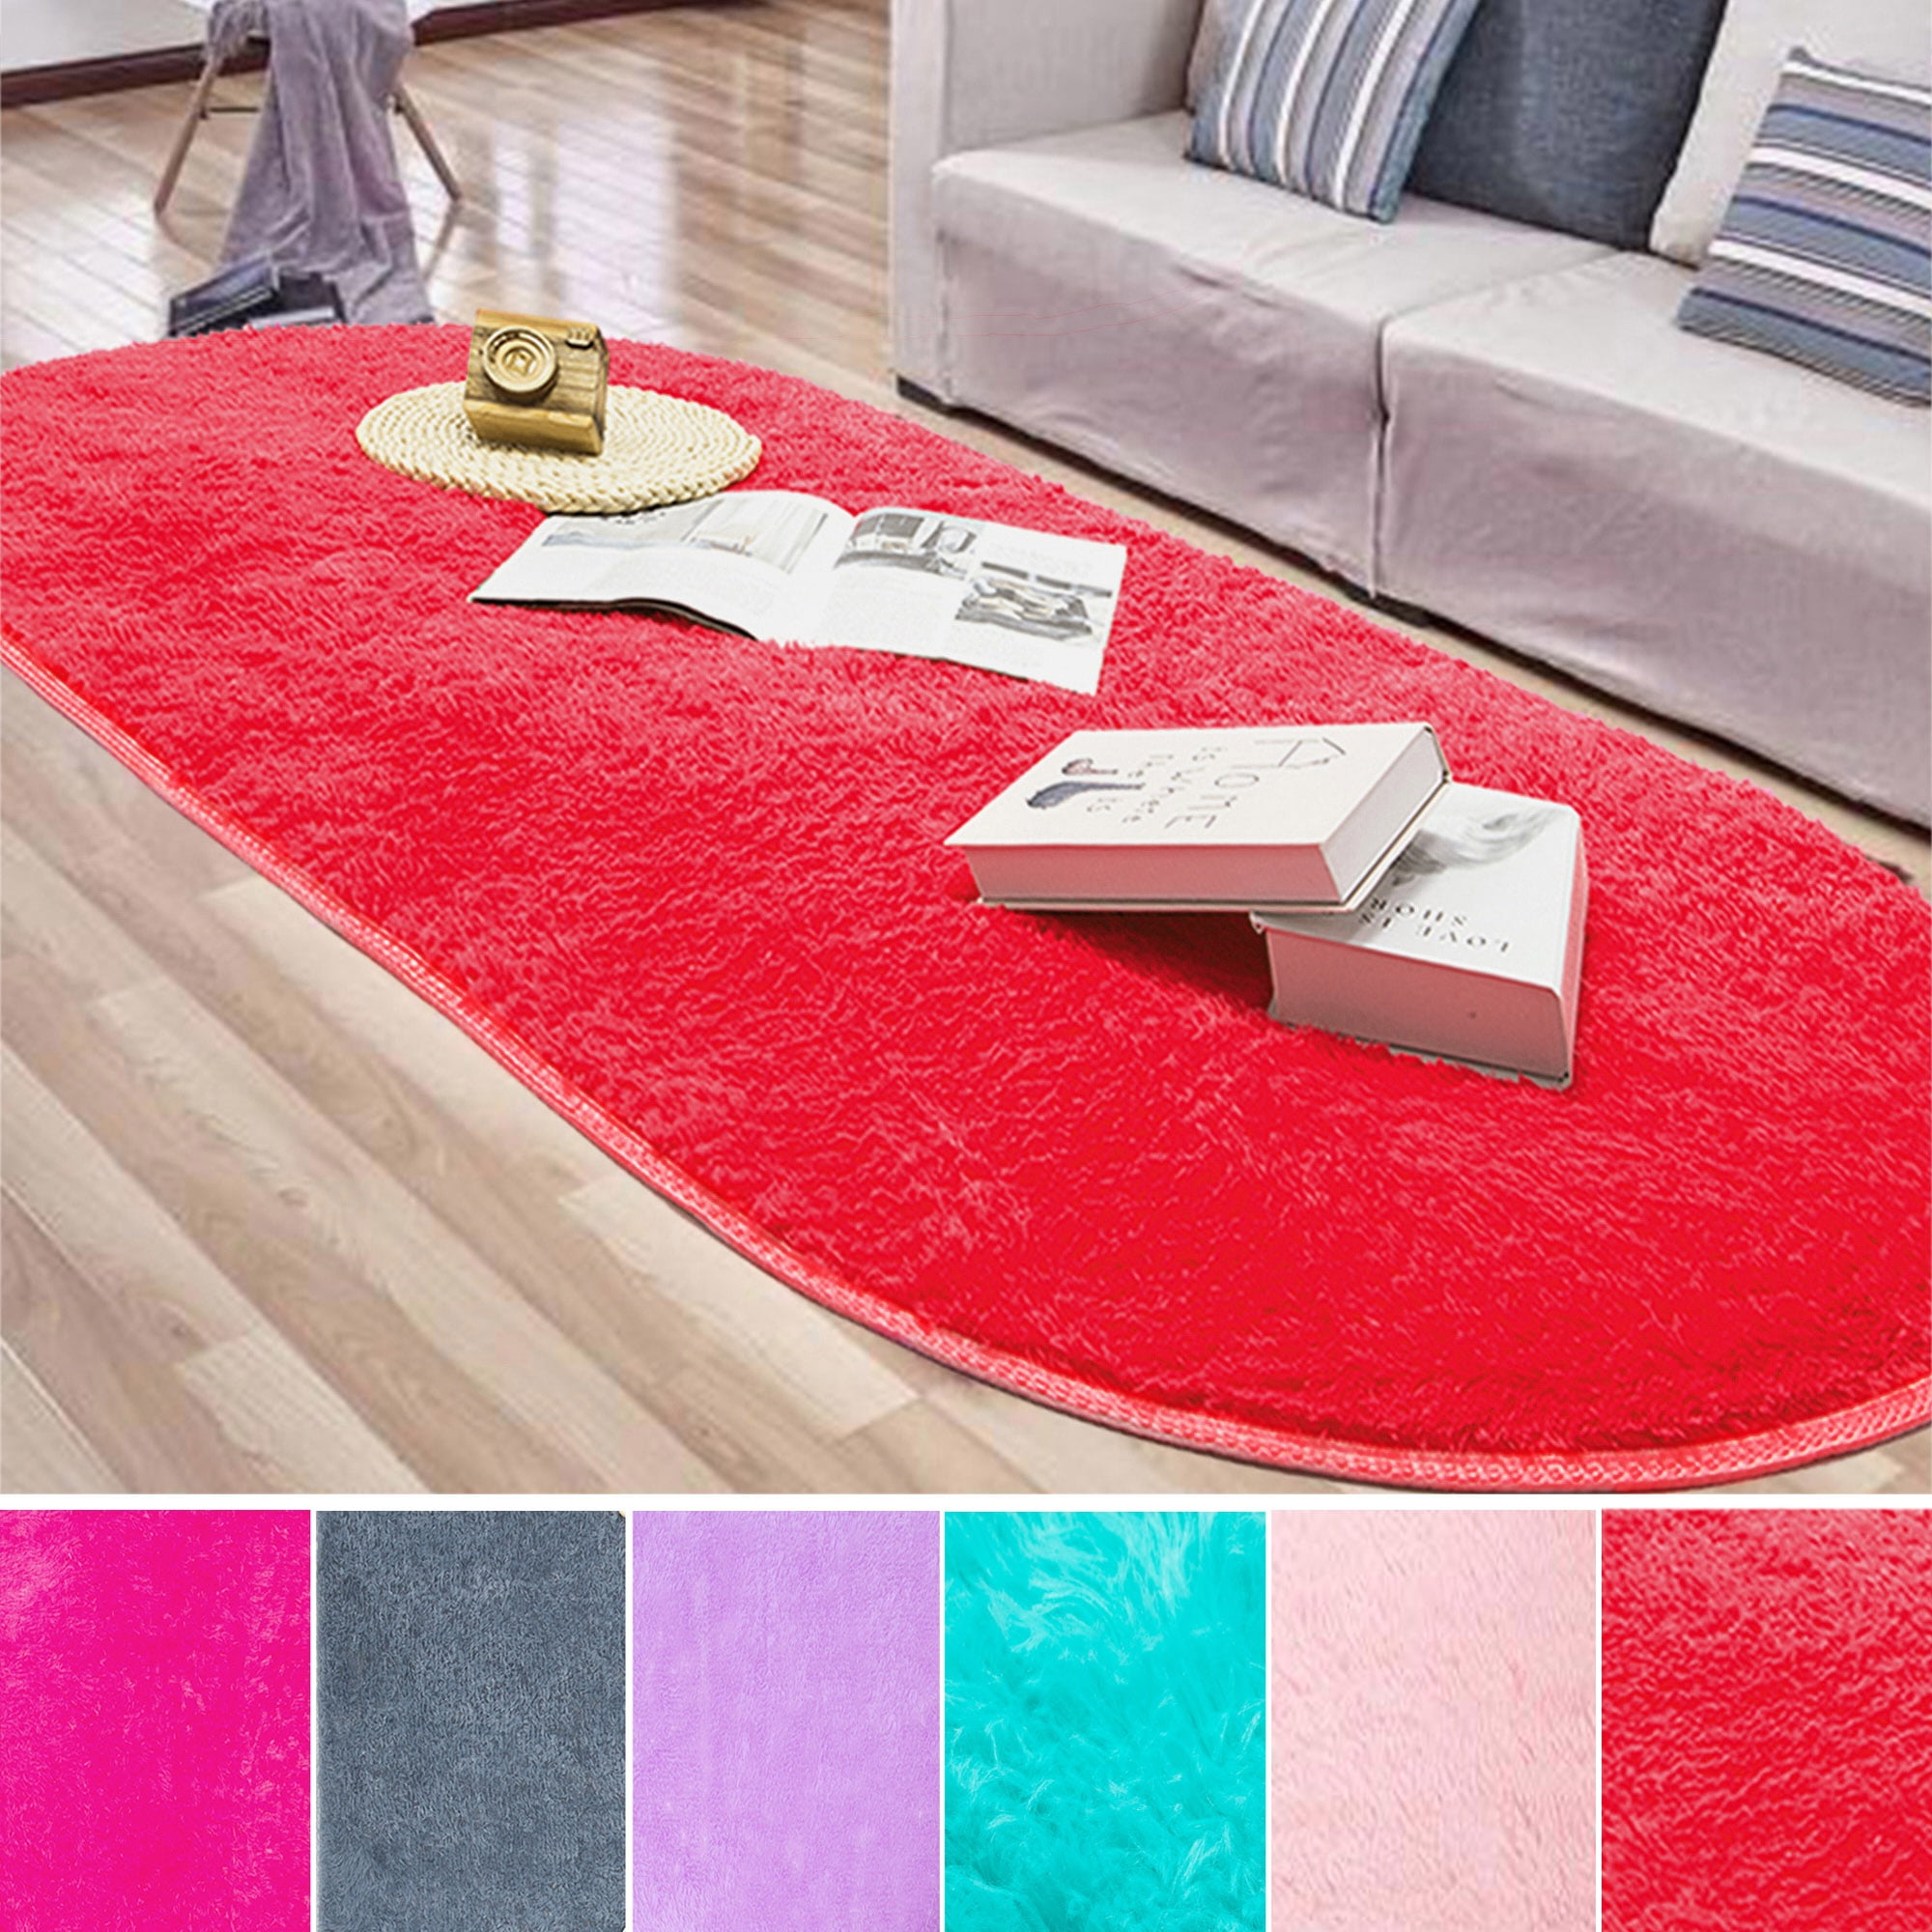 Shaggy Area Rug Carpet Floor Mat Cashmere Cushion Living Room Bedroom Decor Home 